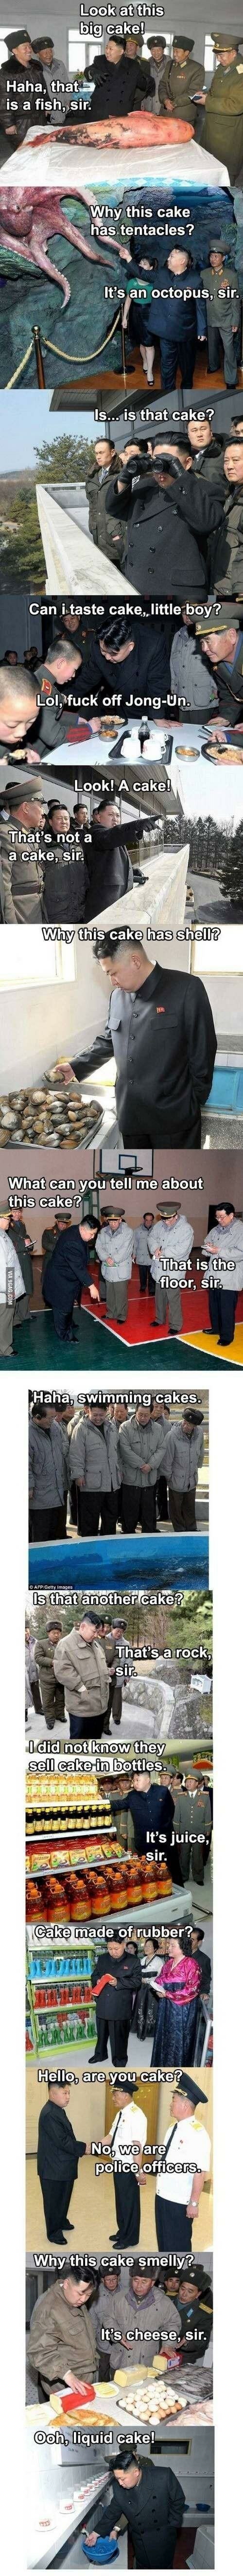 Kim Jong Un discovers the world